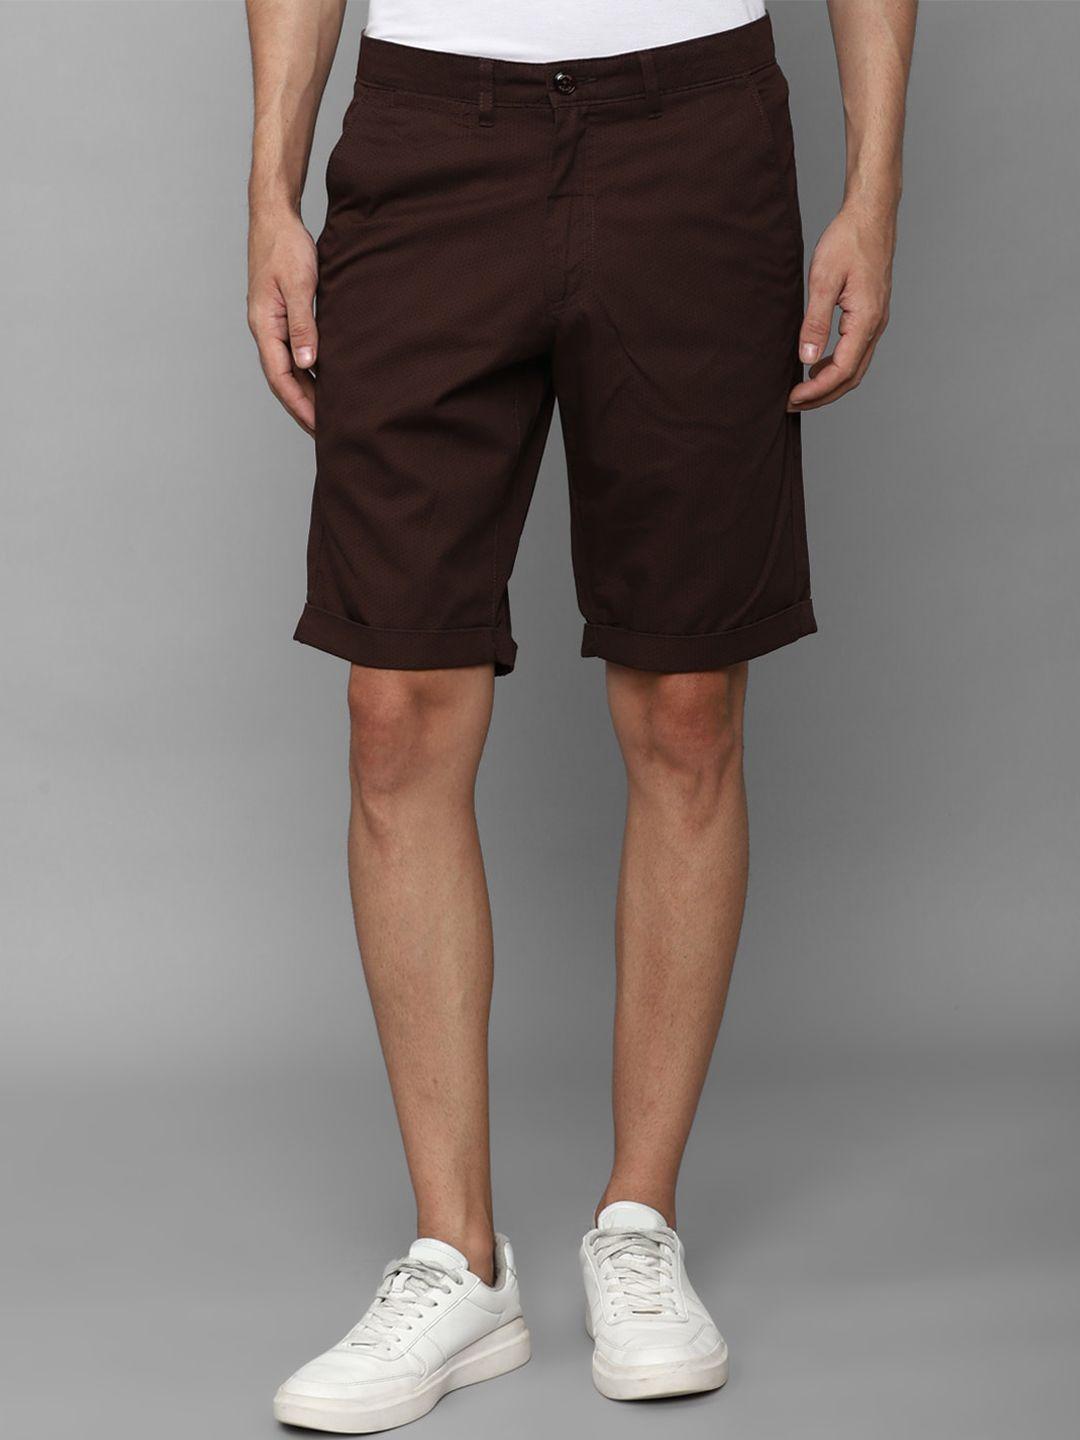 allen solly men slim fit mid-rise pure cotton regular shorts